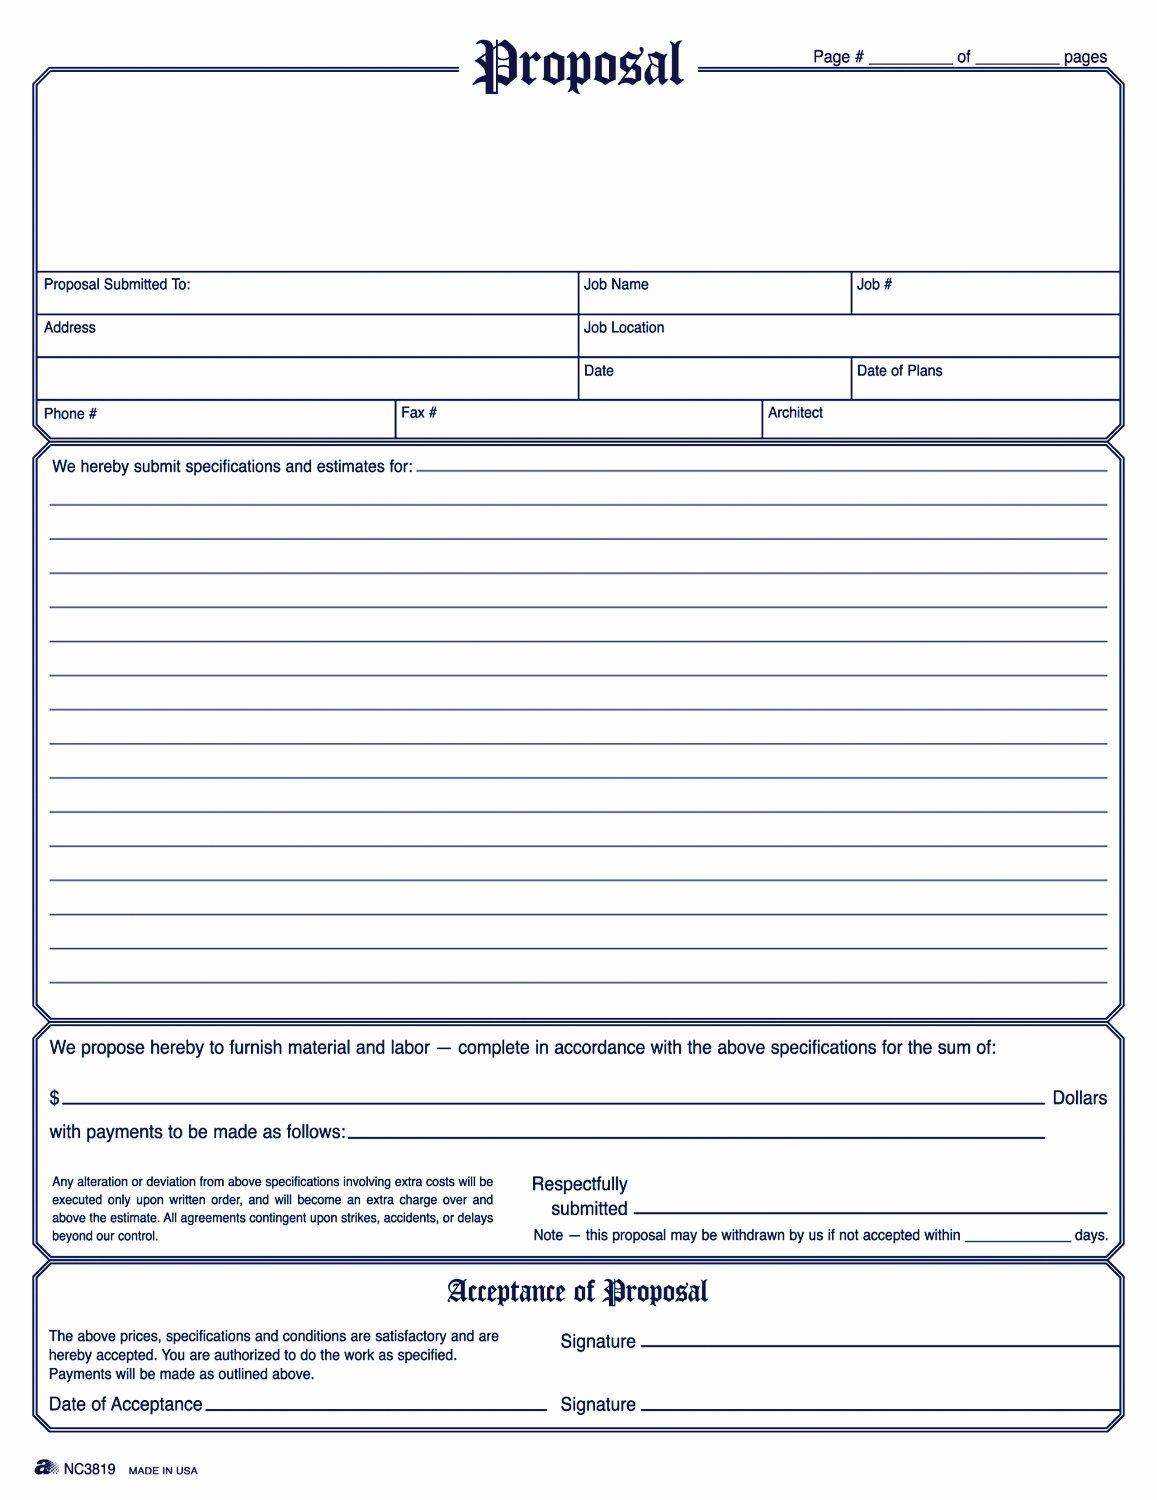 free proposal form template job proposal sample free job proposal 